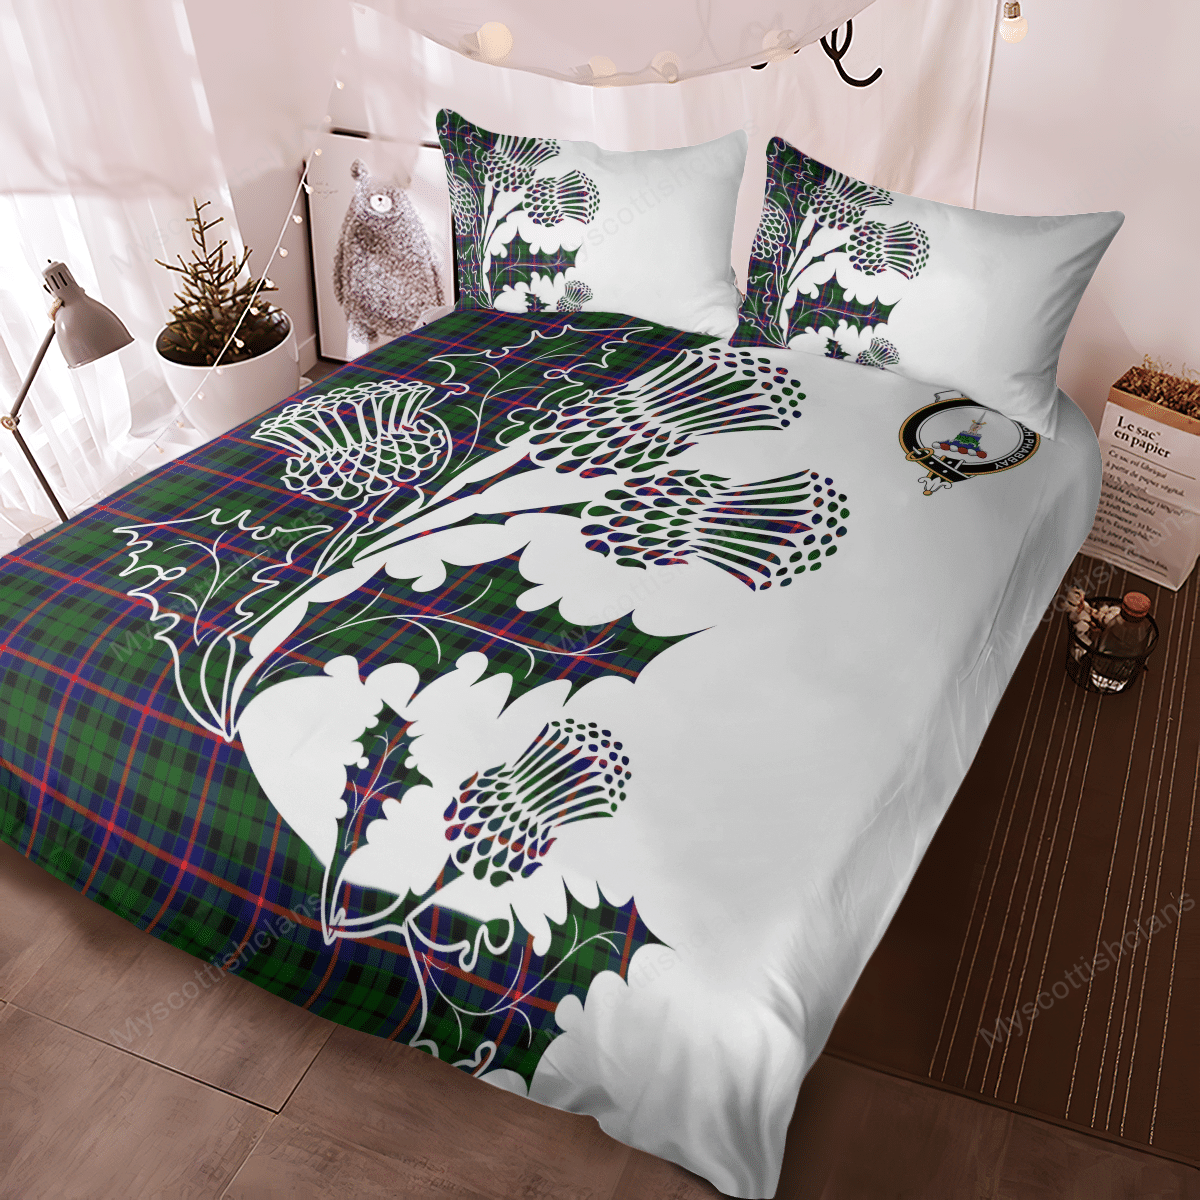 Morrison Tartan Crest Bedding Set - Thistle Style